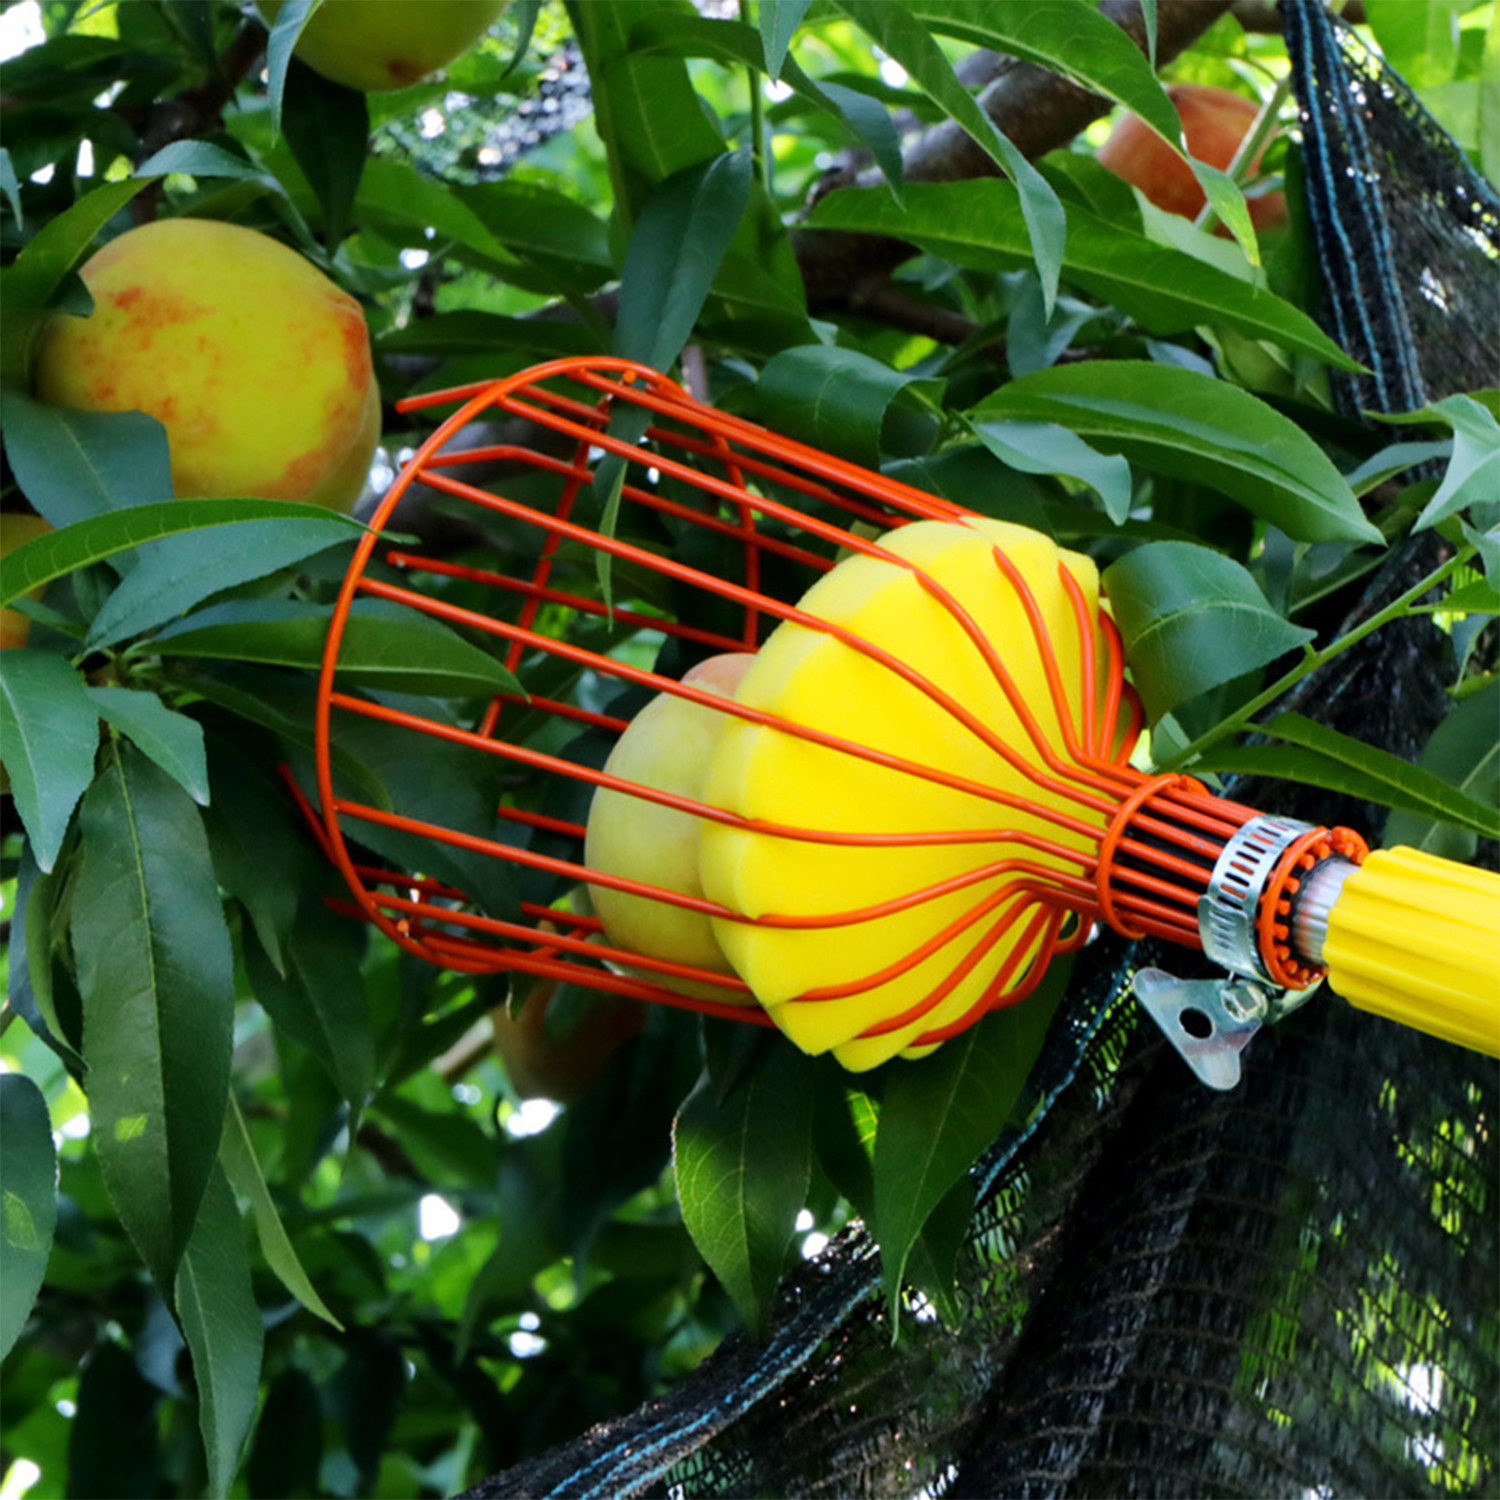 Kuber Industries Lightweight Fruit Picker|Fruit, Mango, Coconut Plucker|Fruit Picking Tool, Basket For Garden (Red)